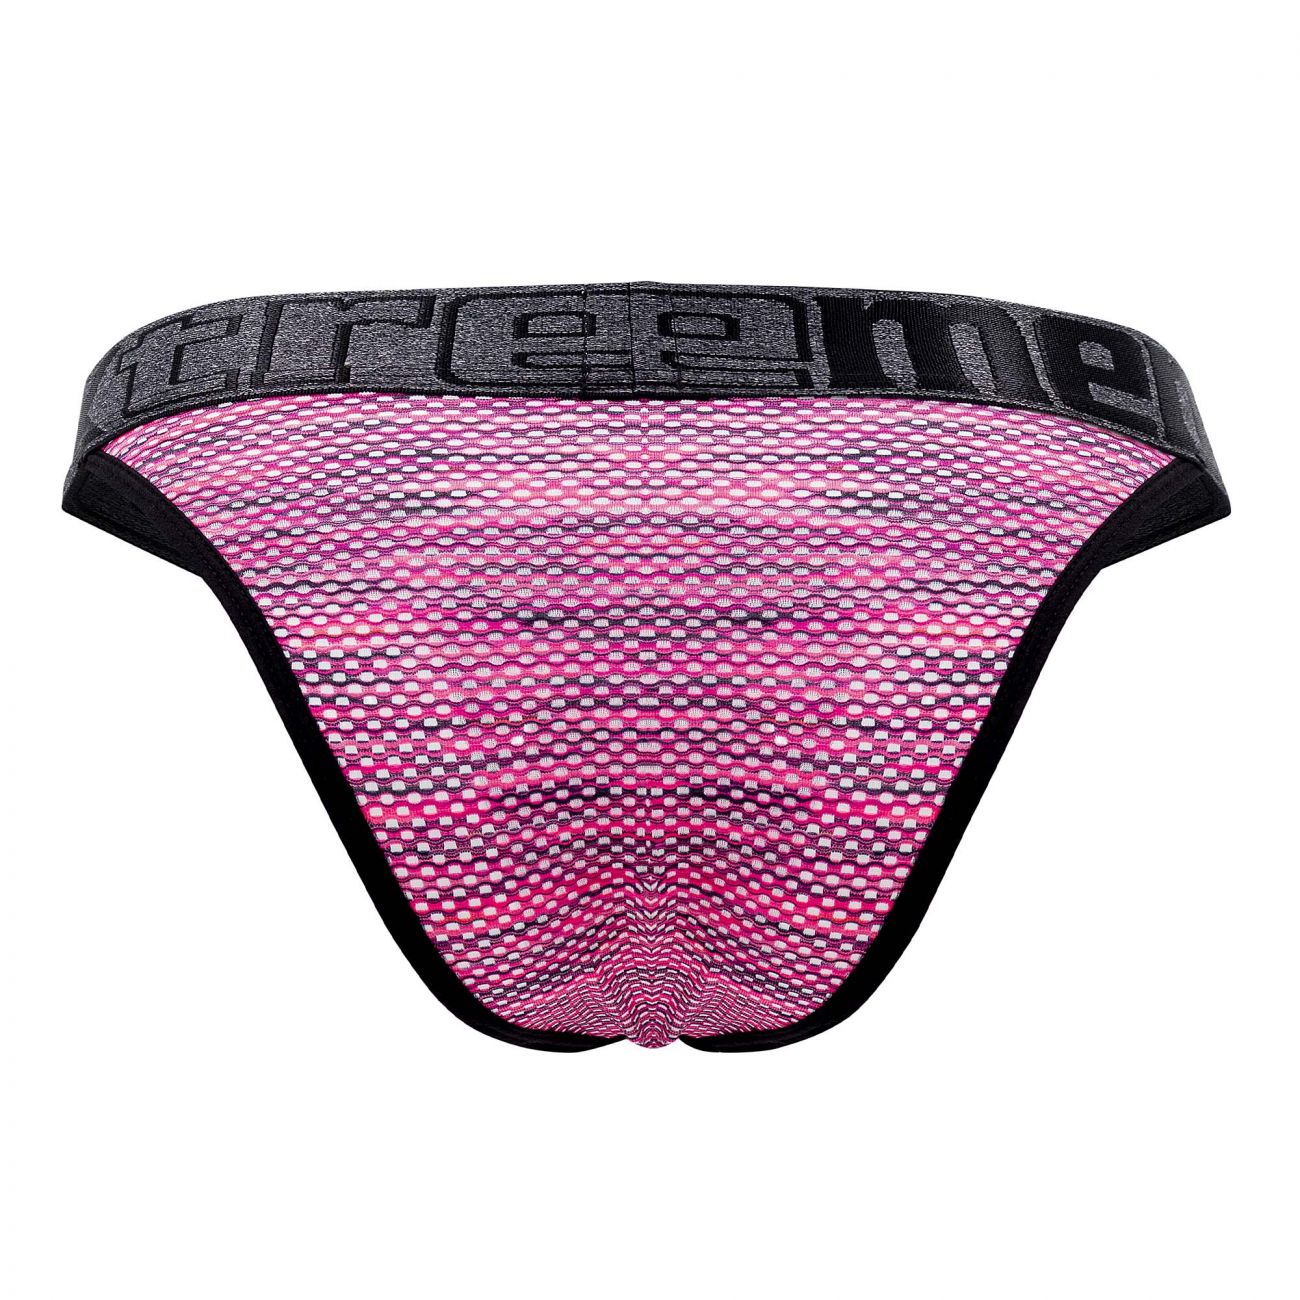 Xtremen 91098 Microfiber Mesh Bikini Pink